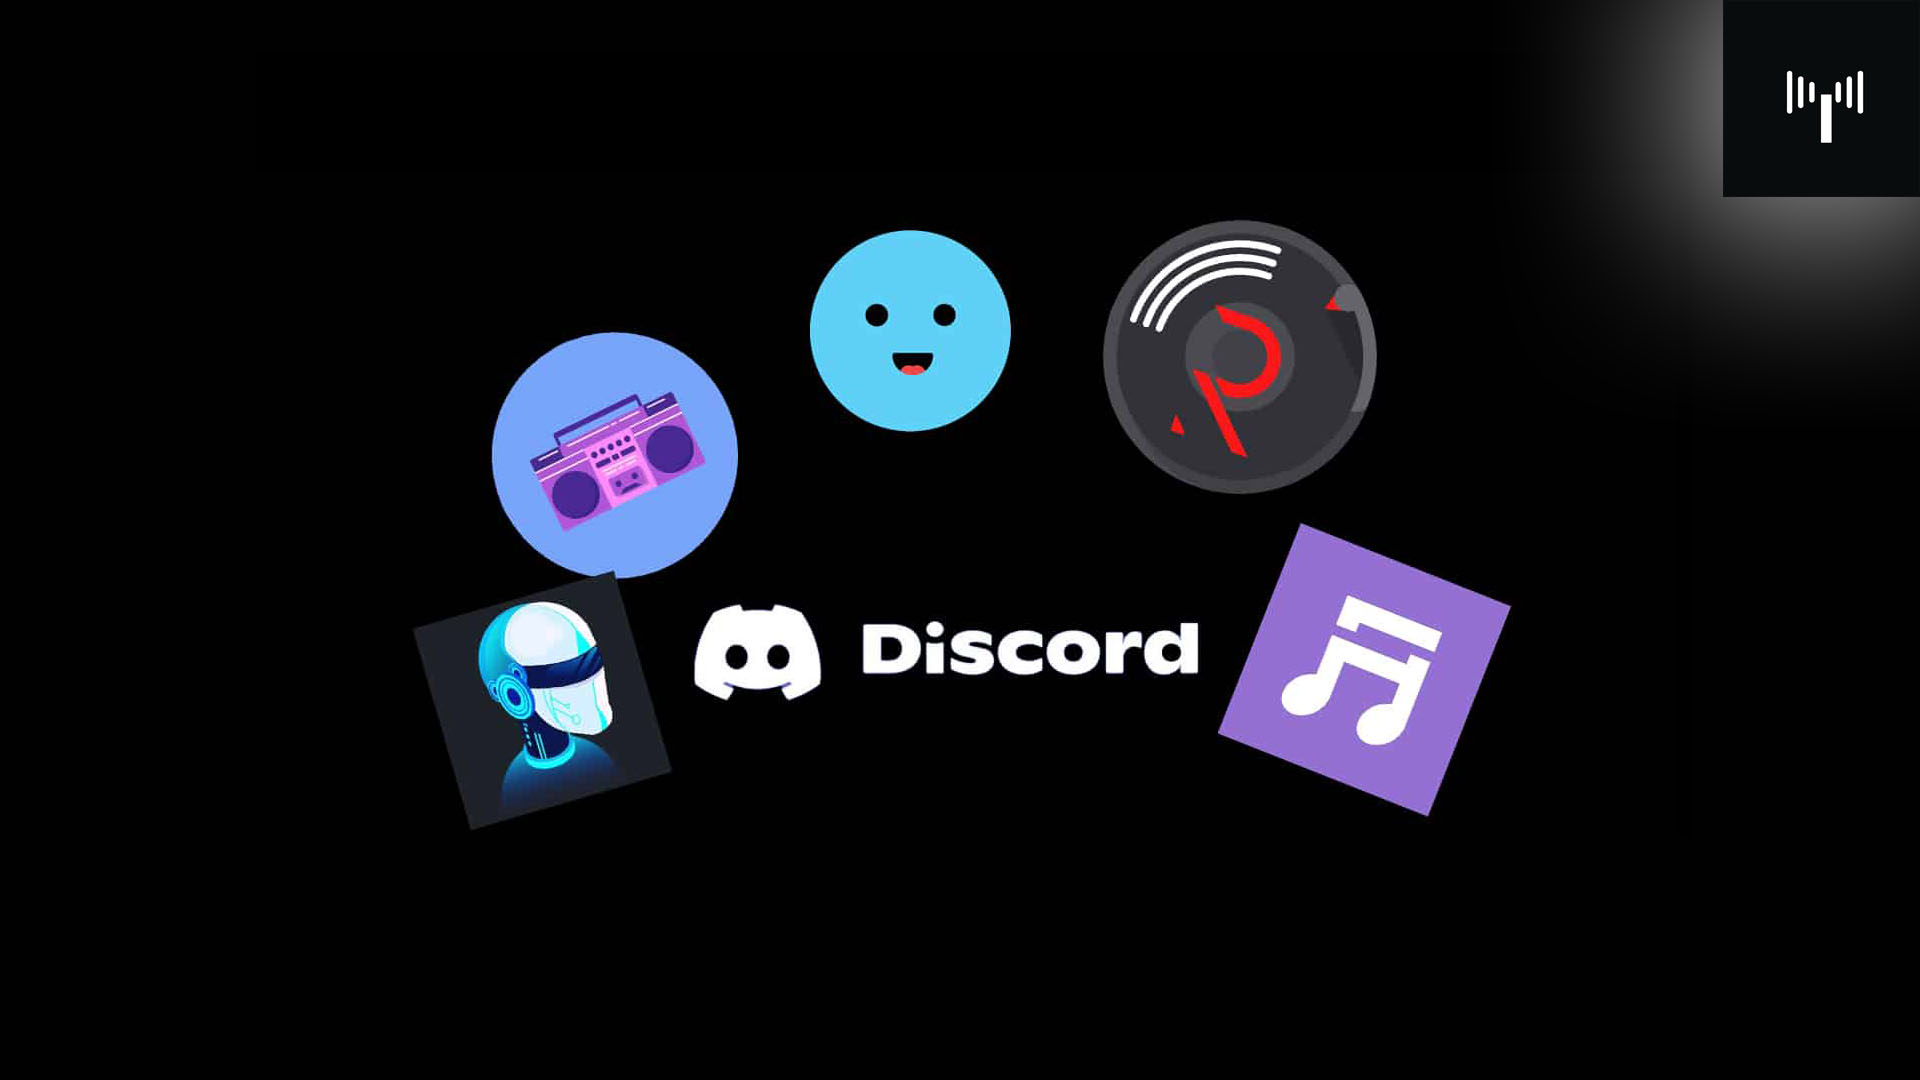 Music Discord Bots  The #1 Discord Bot List